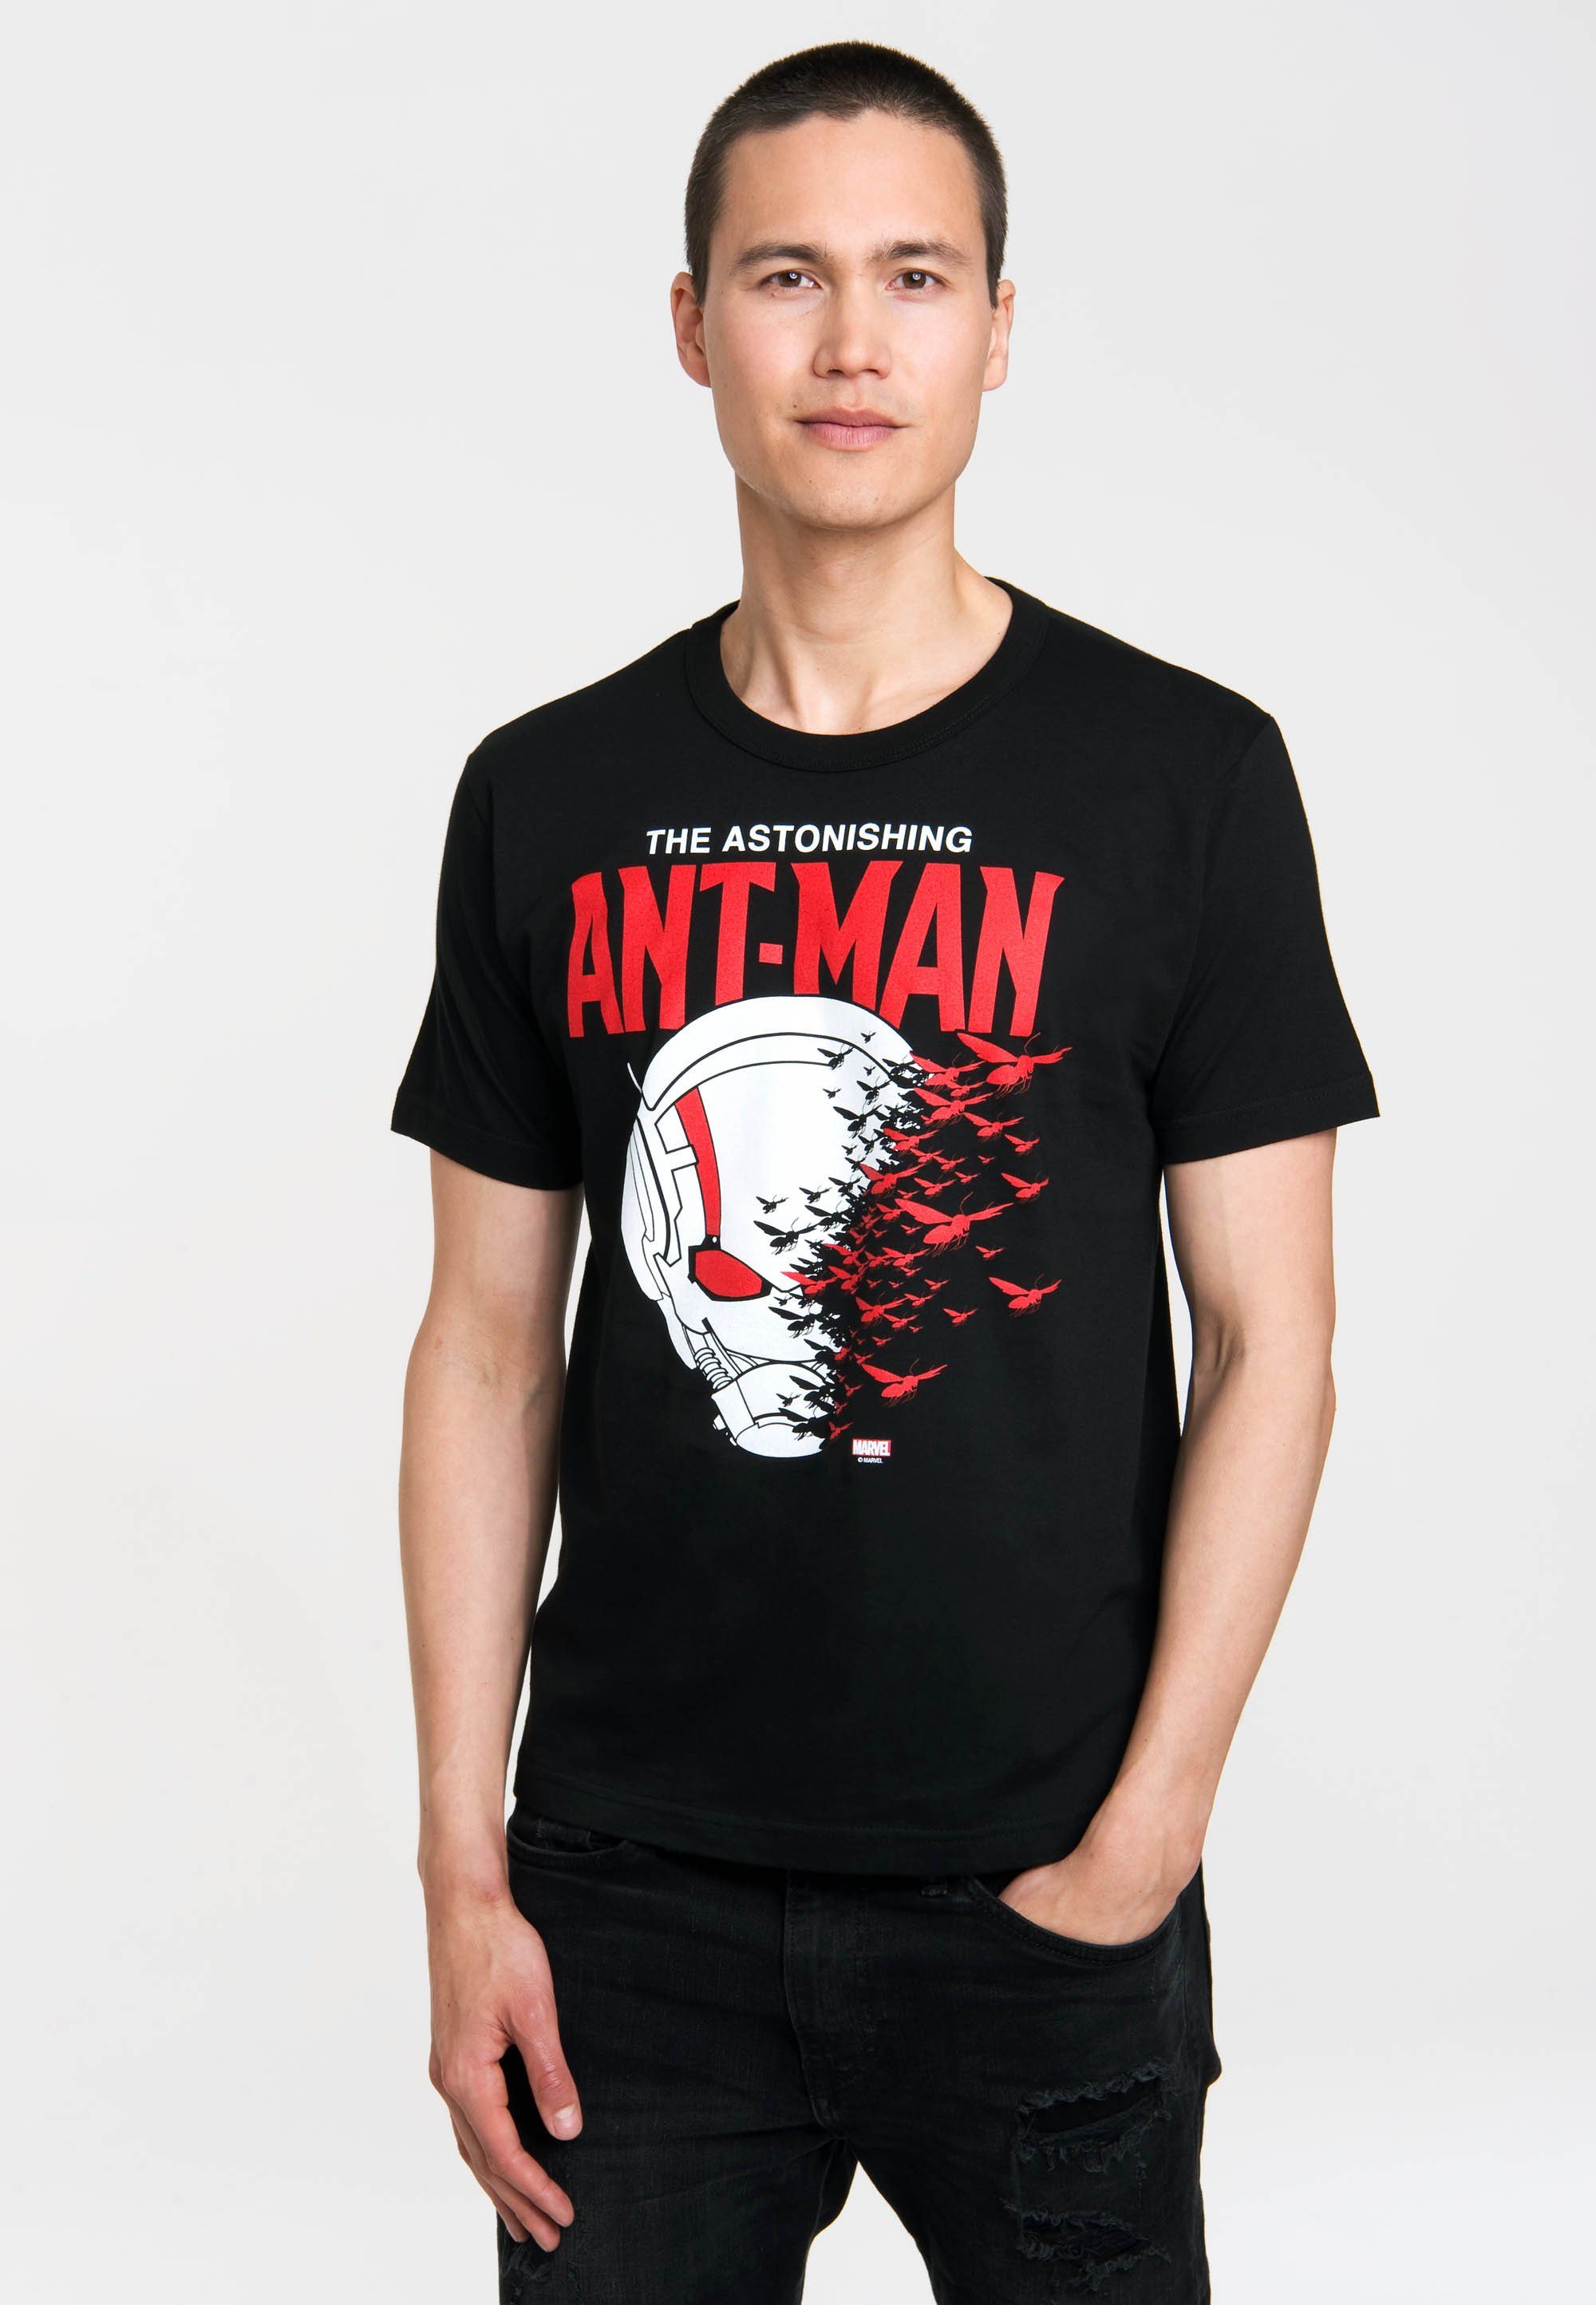 LOGOSHIRT T-Shirt Ant-Man - Marvel mit Comics Print großem